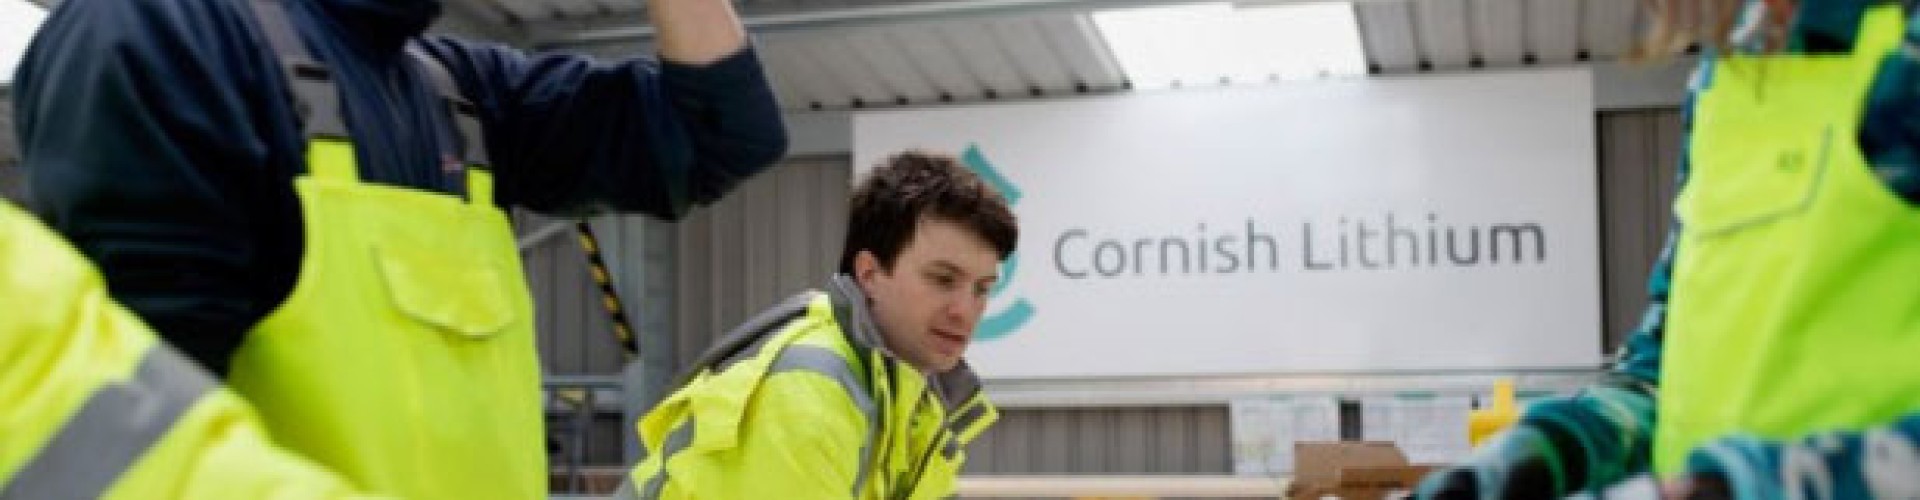 Cornish Lithium workers with machinery